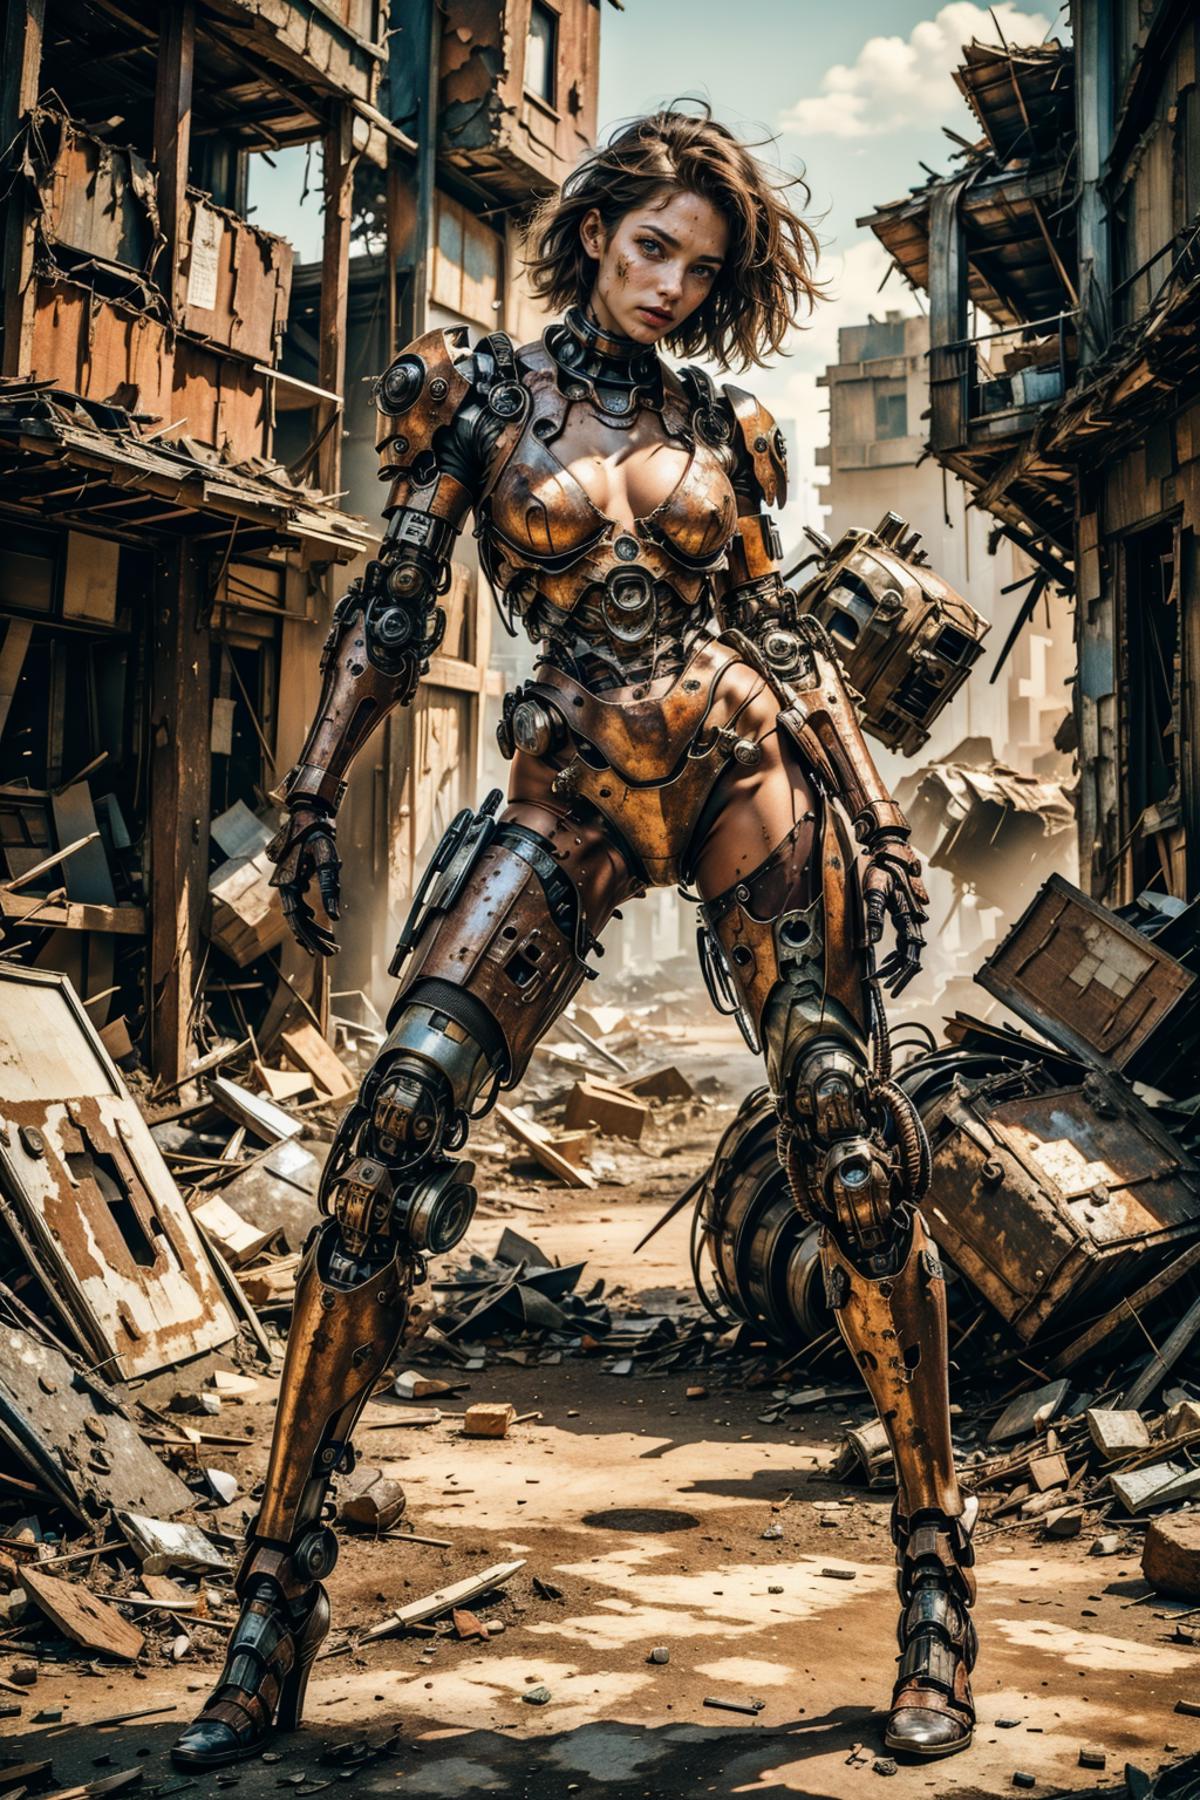 Rusty Armor image by nullsync